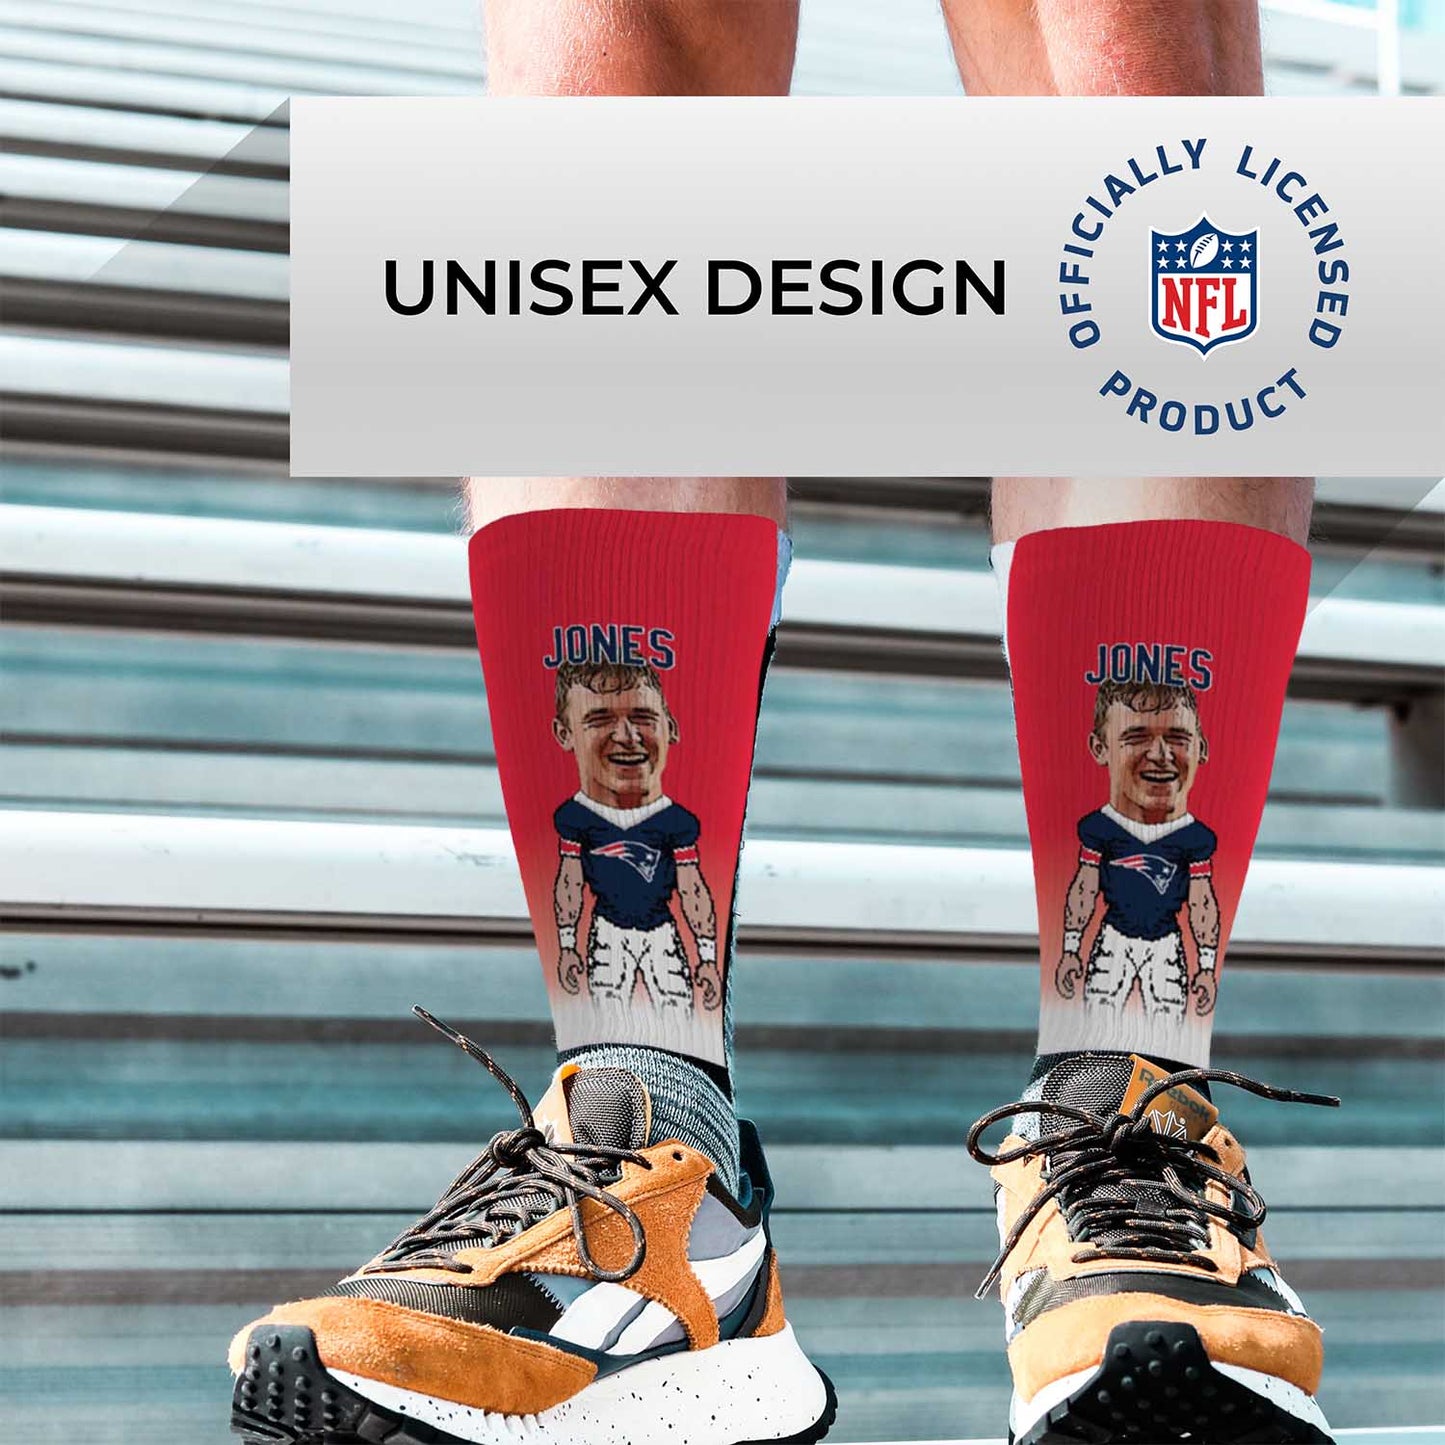 New England Patriots NFL Adult V Curve MVP Player Crew Socks - Red